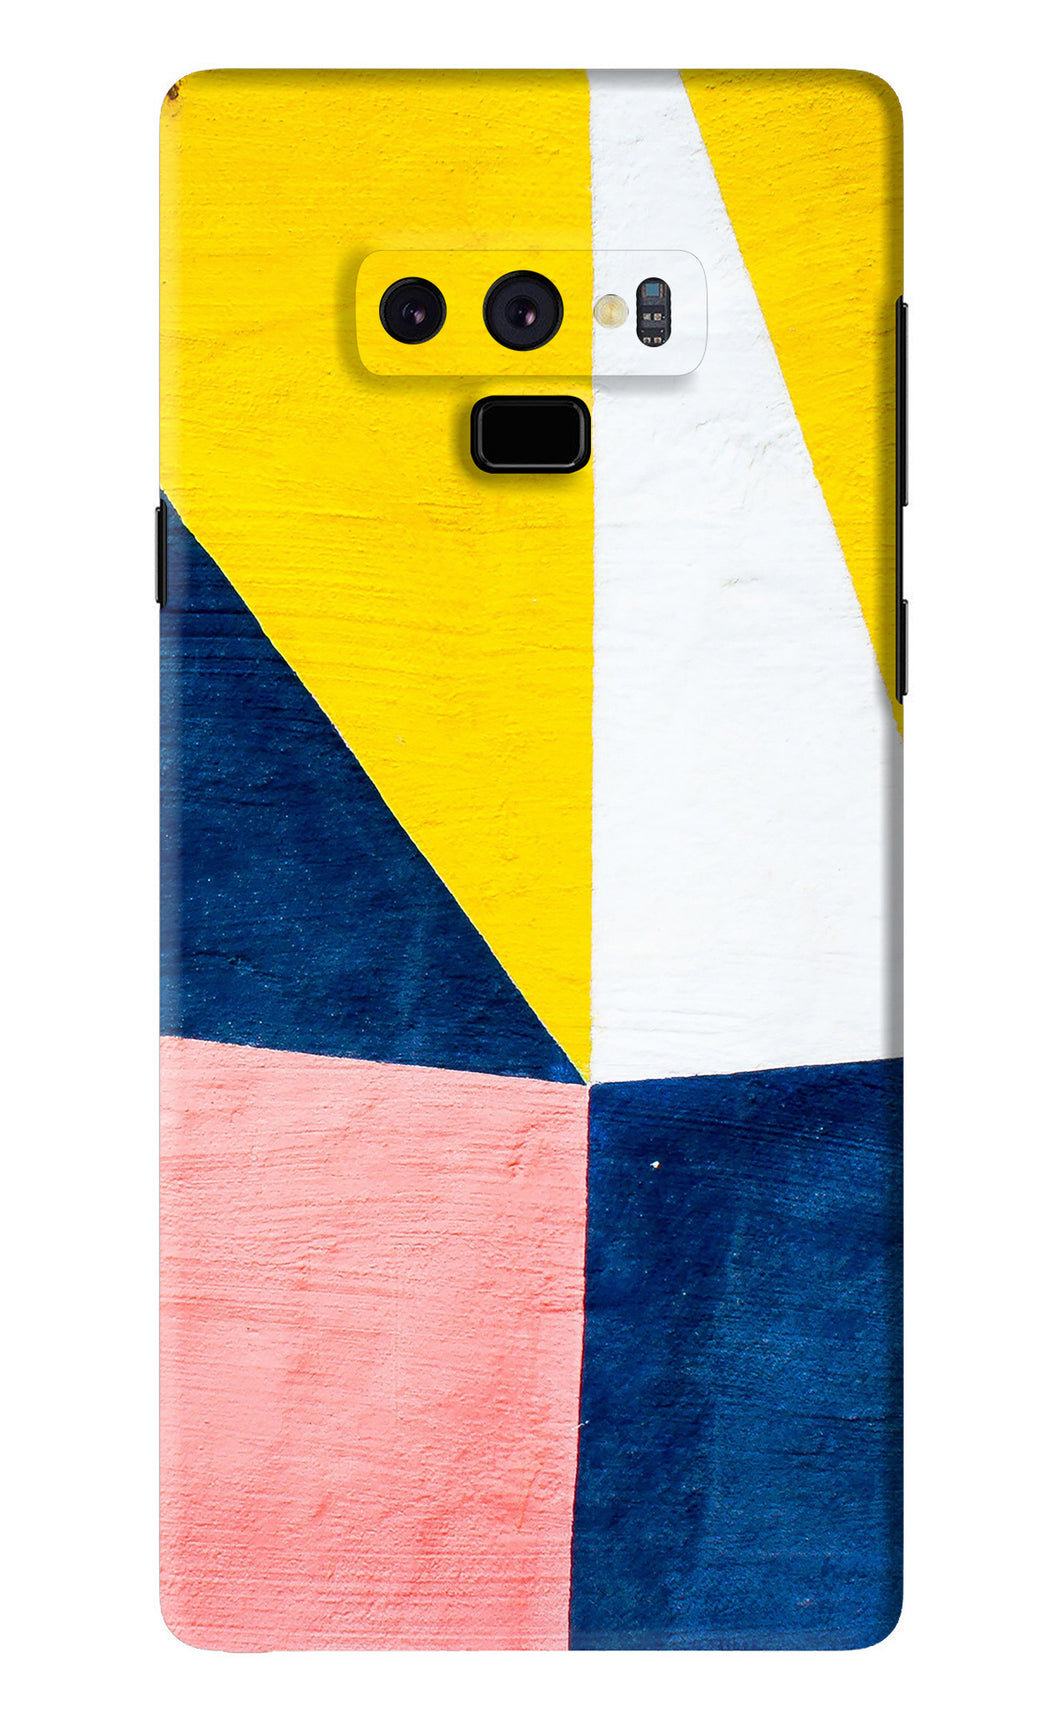 Colourful Art Samsung Galaxy Note 9 Back Skin Wrap